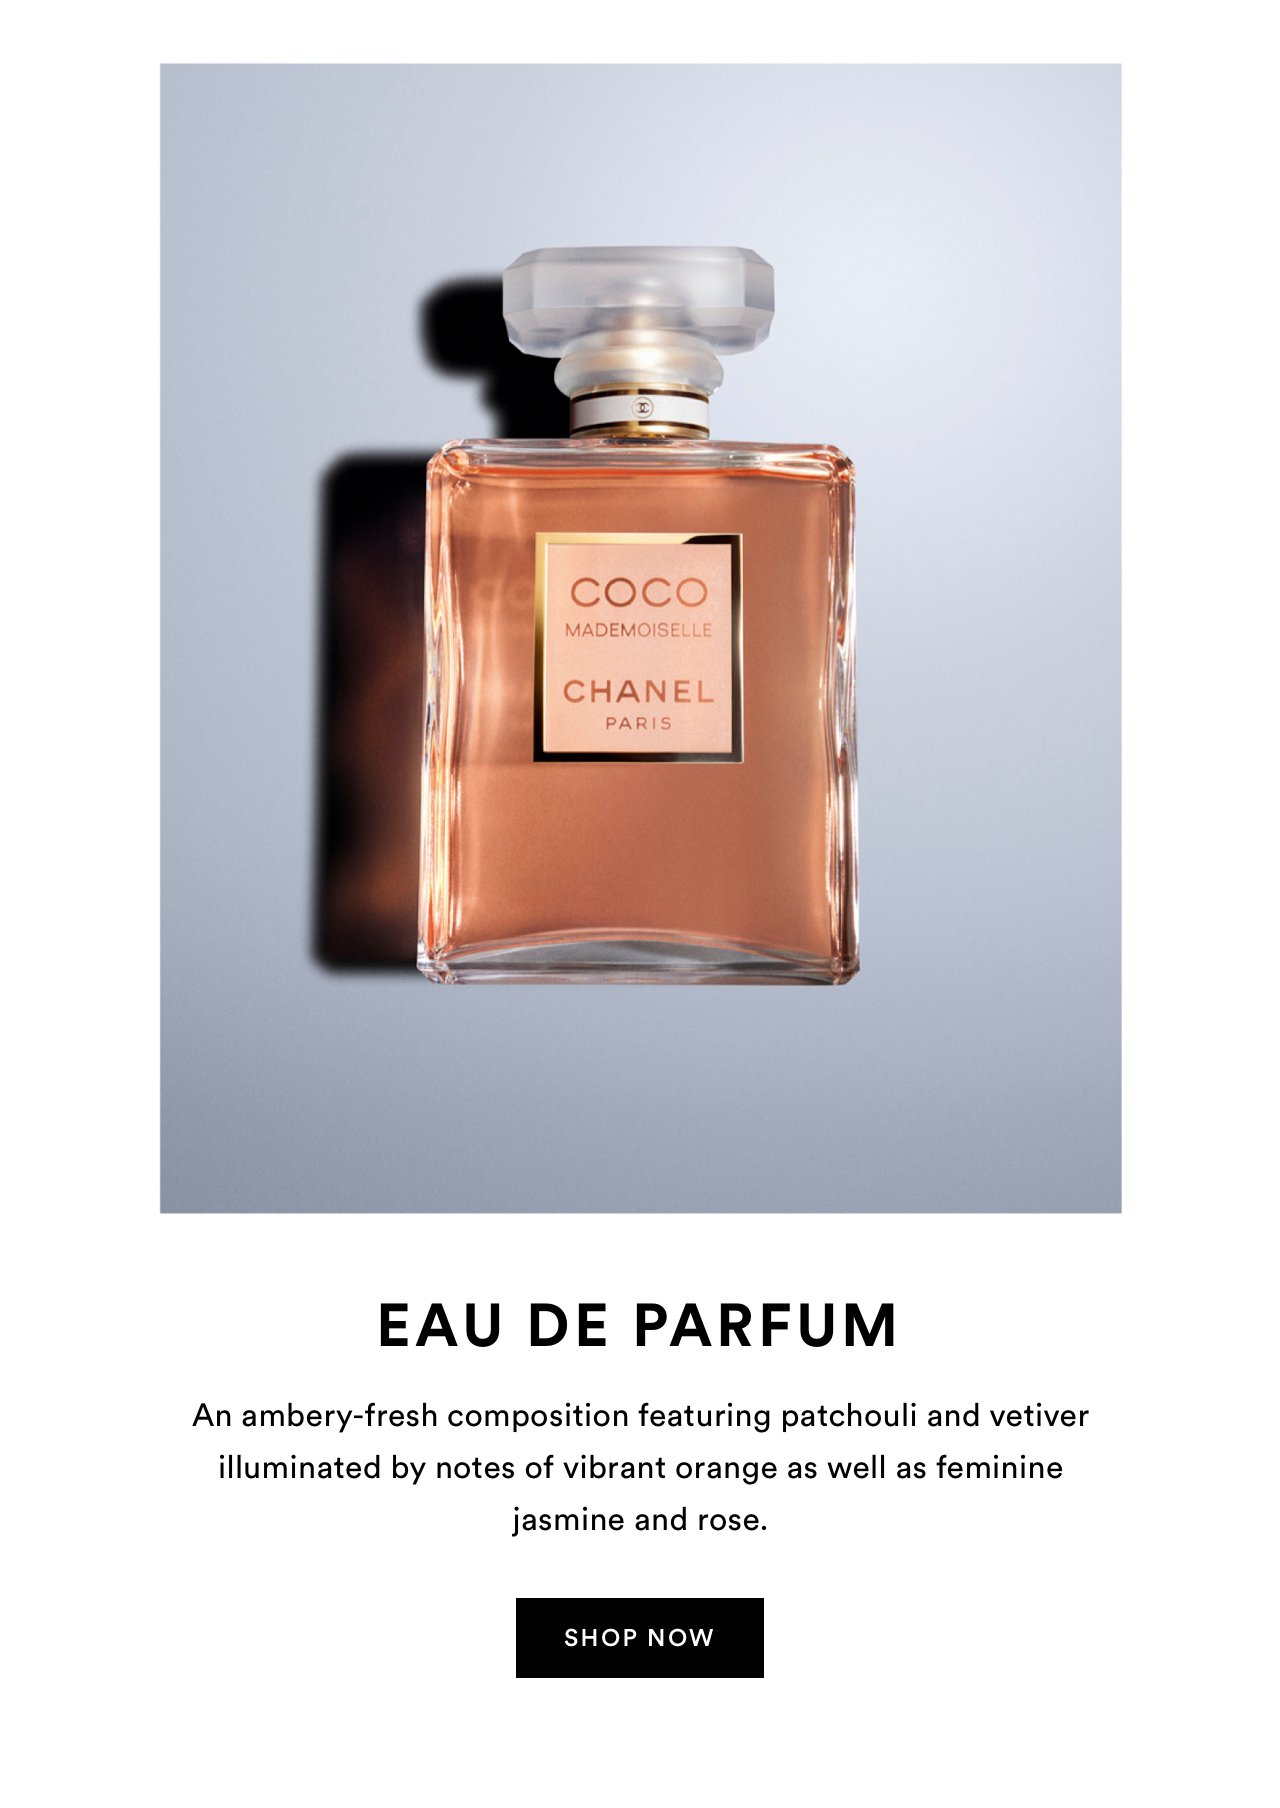 gogo mademoiselle chanel parfum